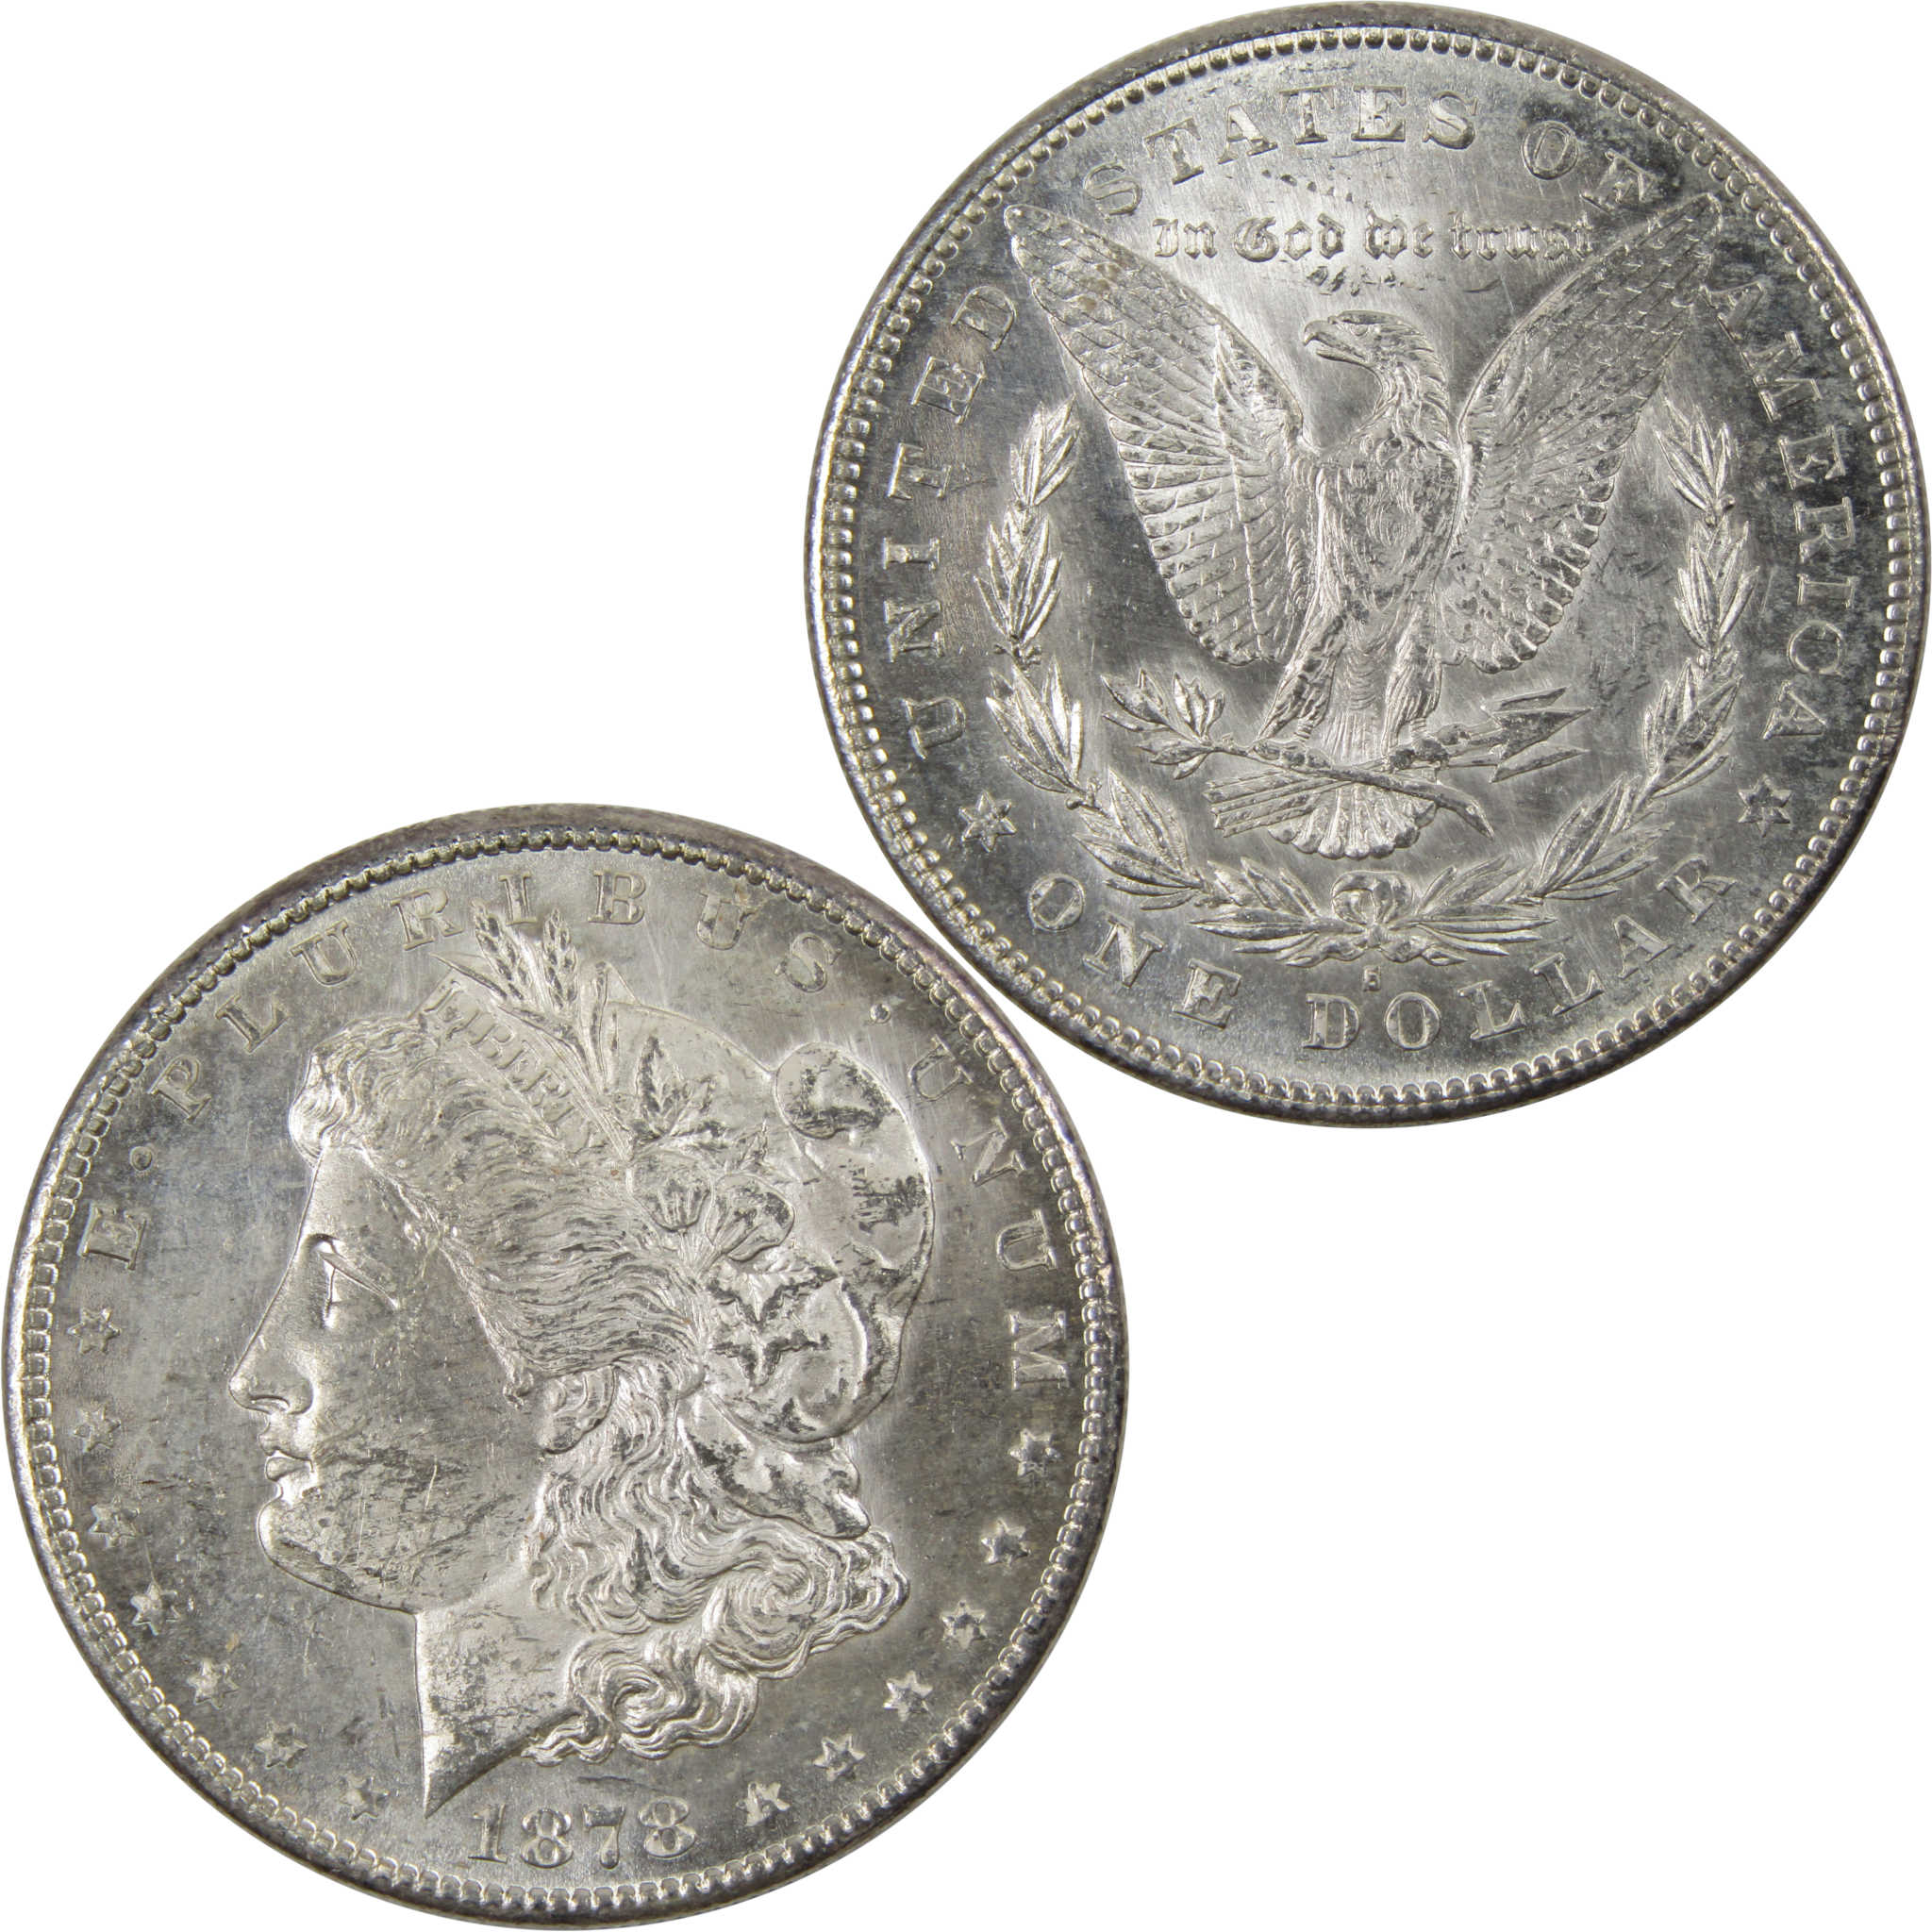 1878 S Morgan Dollar BU Uncirculated 90% Silver $1 Coin SKU:I7418 - Morgan coin - Morgan silver dollar - Morgan silver dollar for sale - Profile Coins &amp; Collectibles